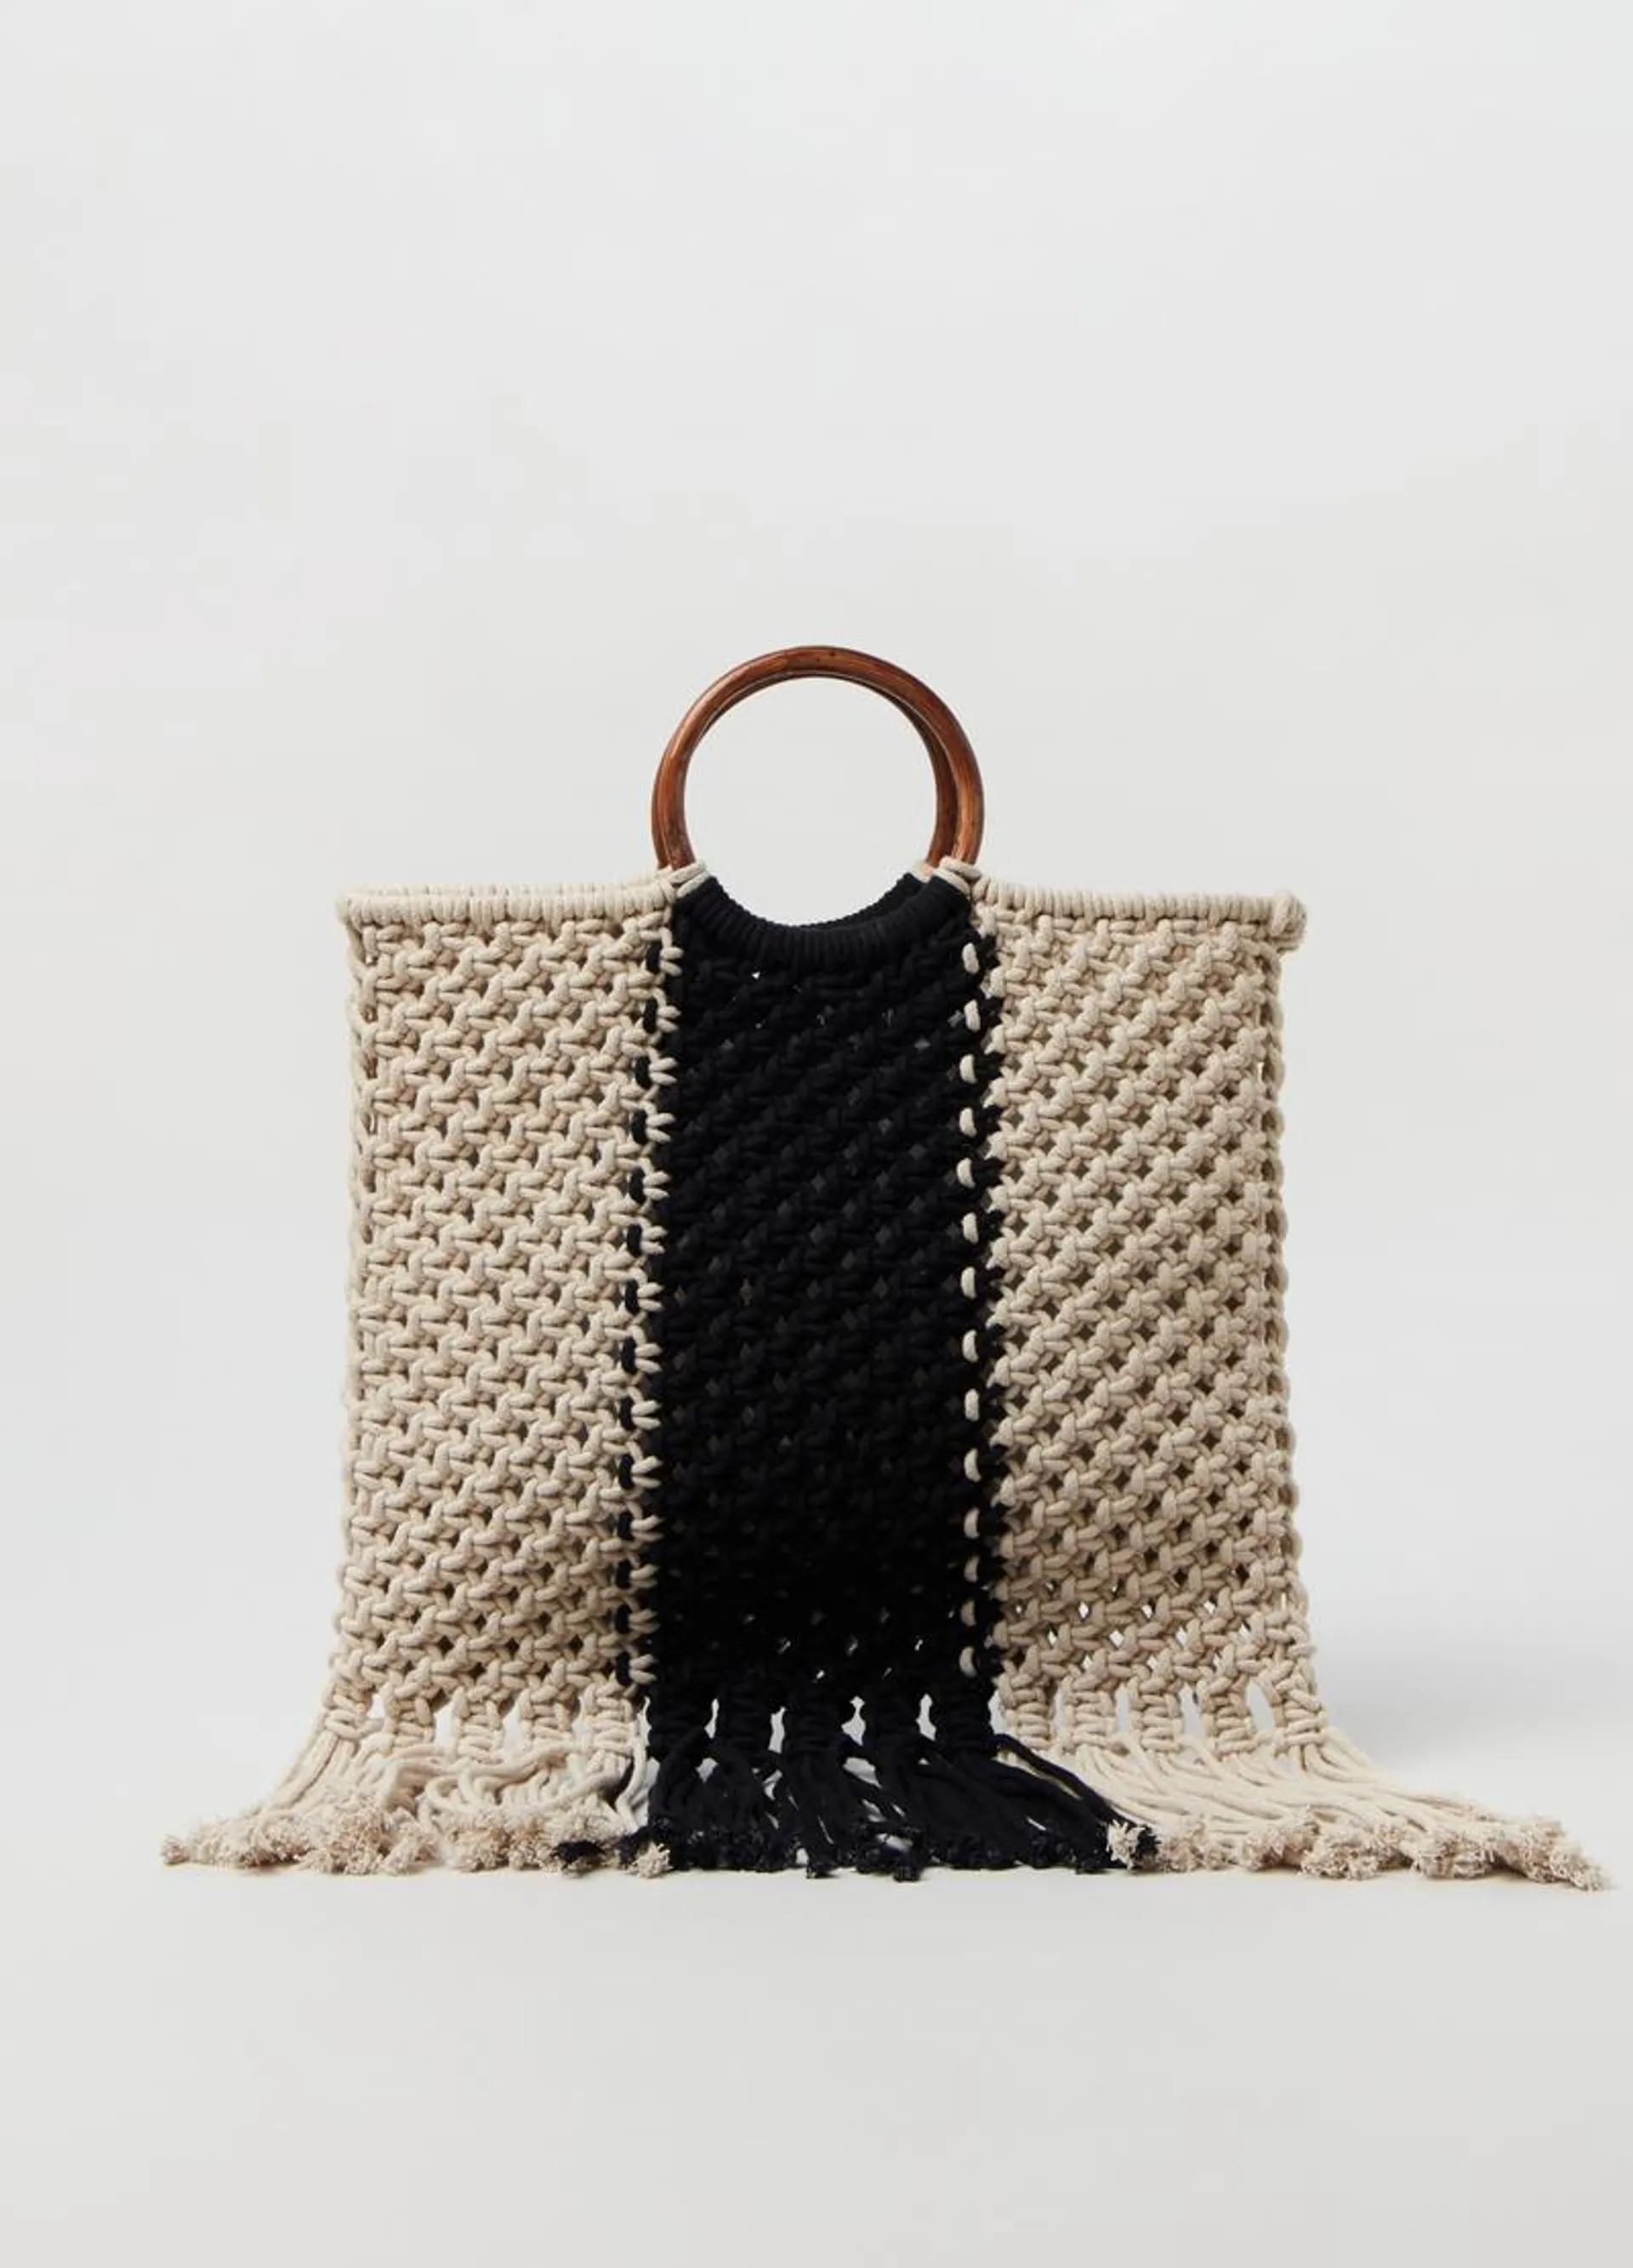 PIOMBO crochet bag with fringing